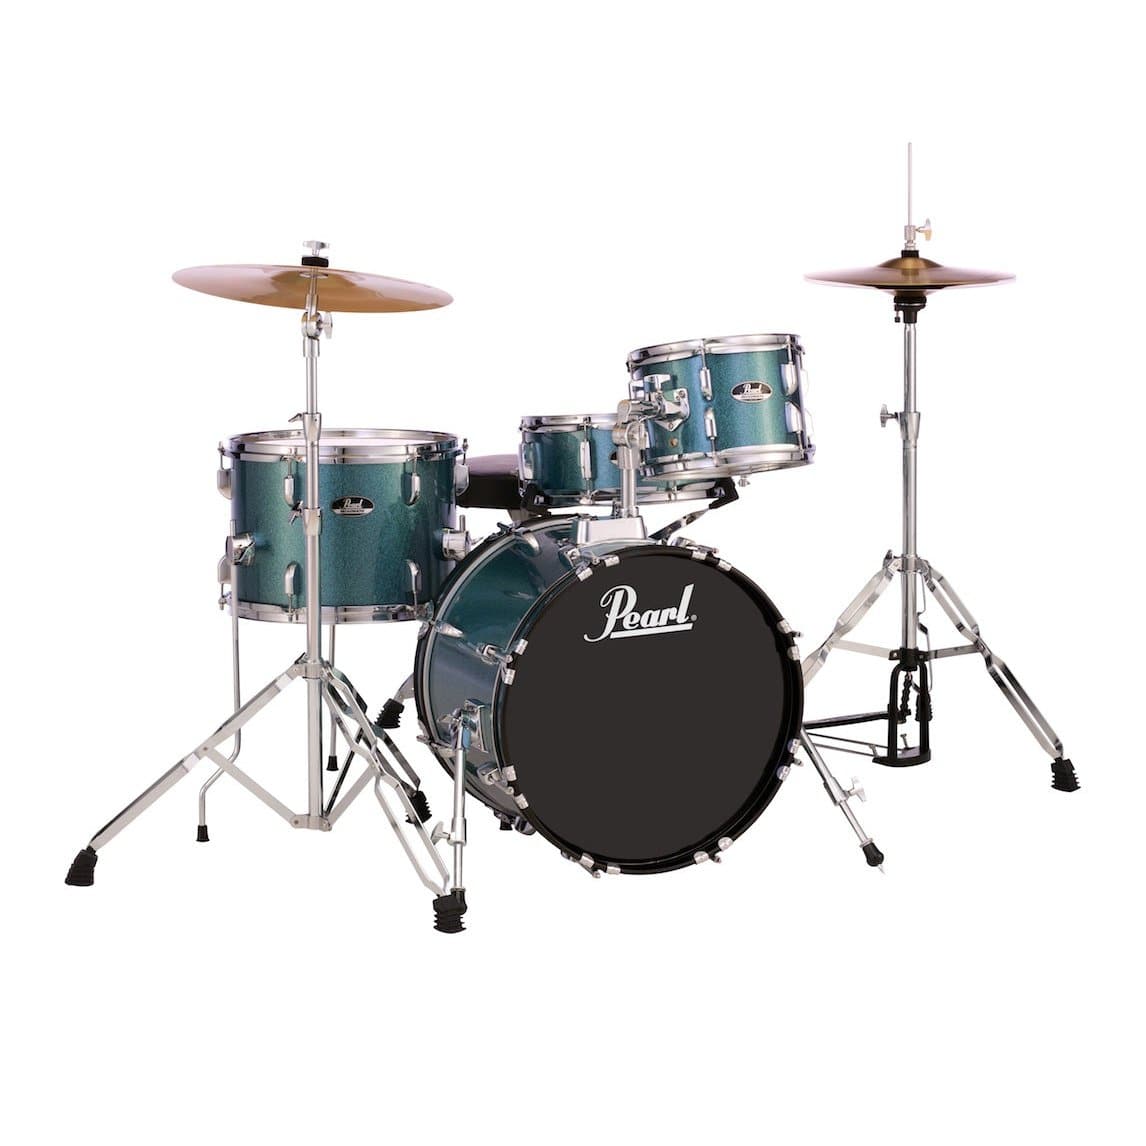 Pearl Roadshow Complete 4-pc Drum Set w/Hardware and Cymbals - Aqua Blue Glitter